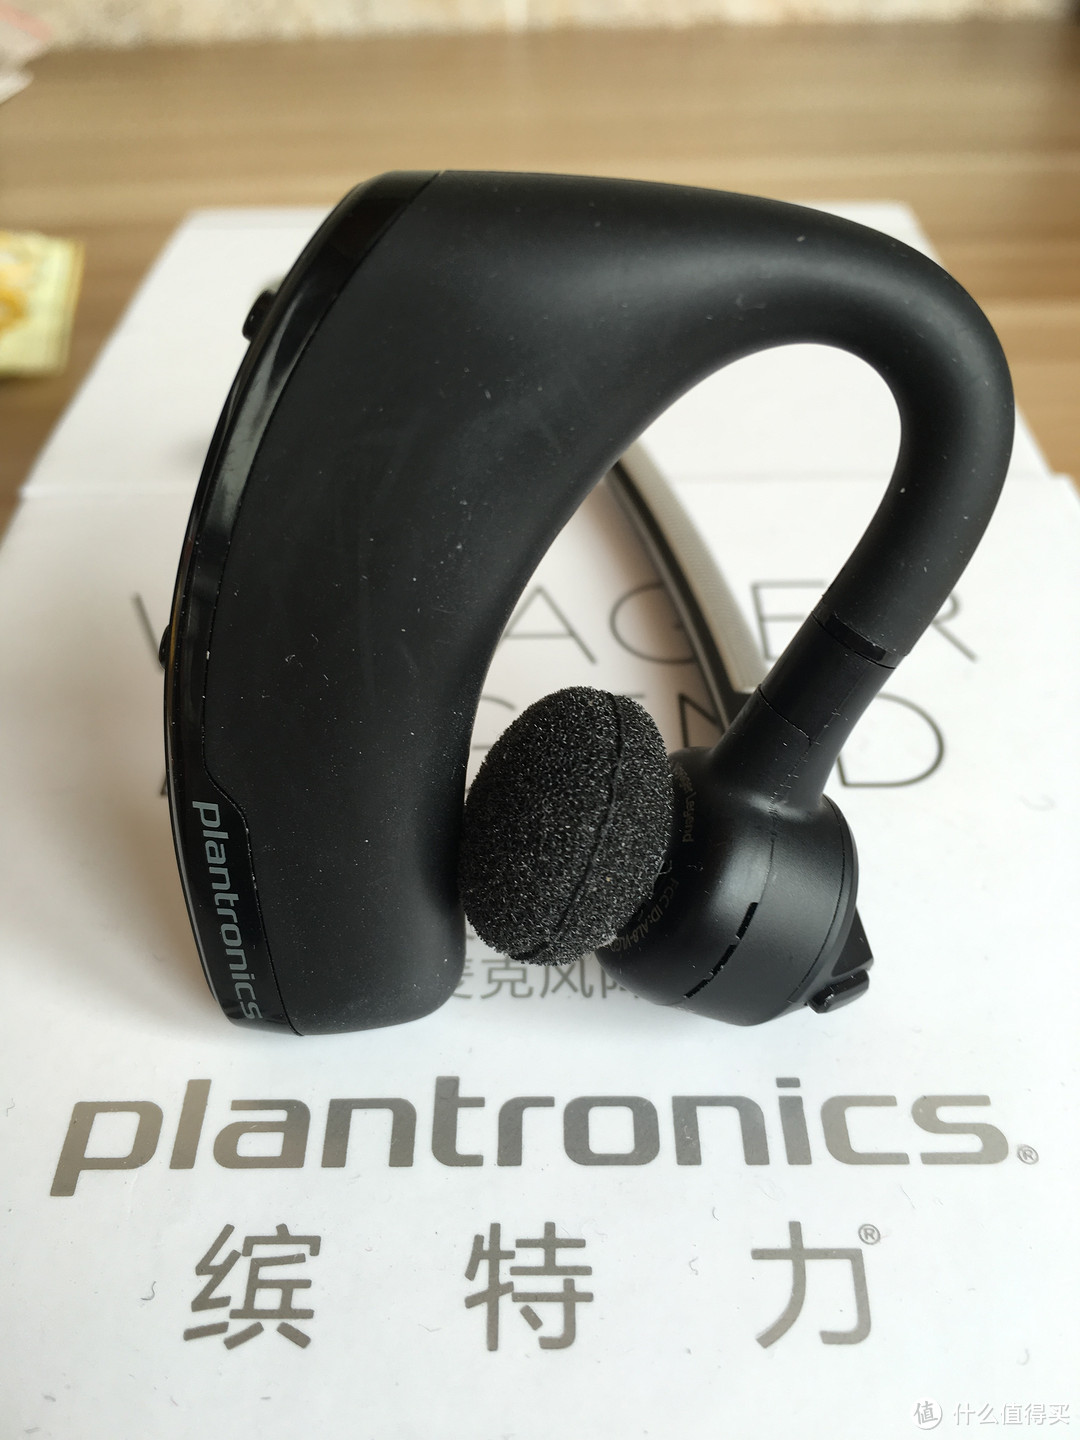 plantronics 缤特力 Voyager Legend蓝牙耳机使用评测